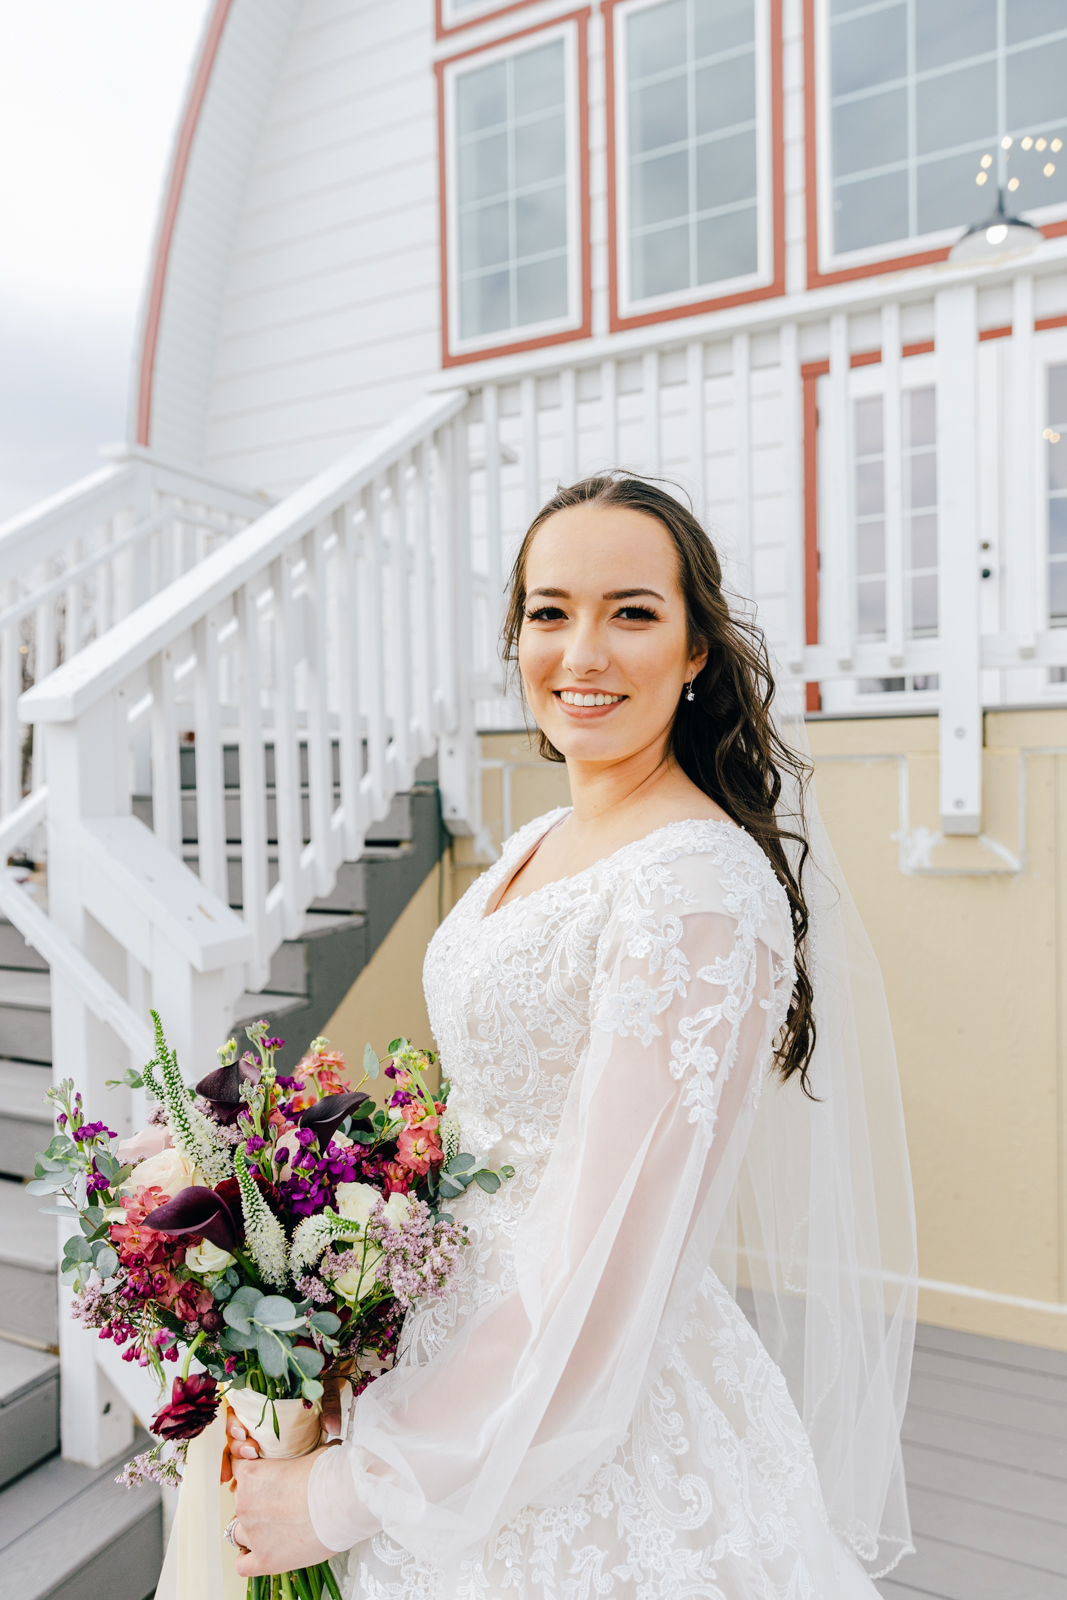 Jackson Hole wedding photographer captures bride outside barn wedding venue idaho falls